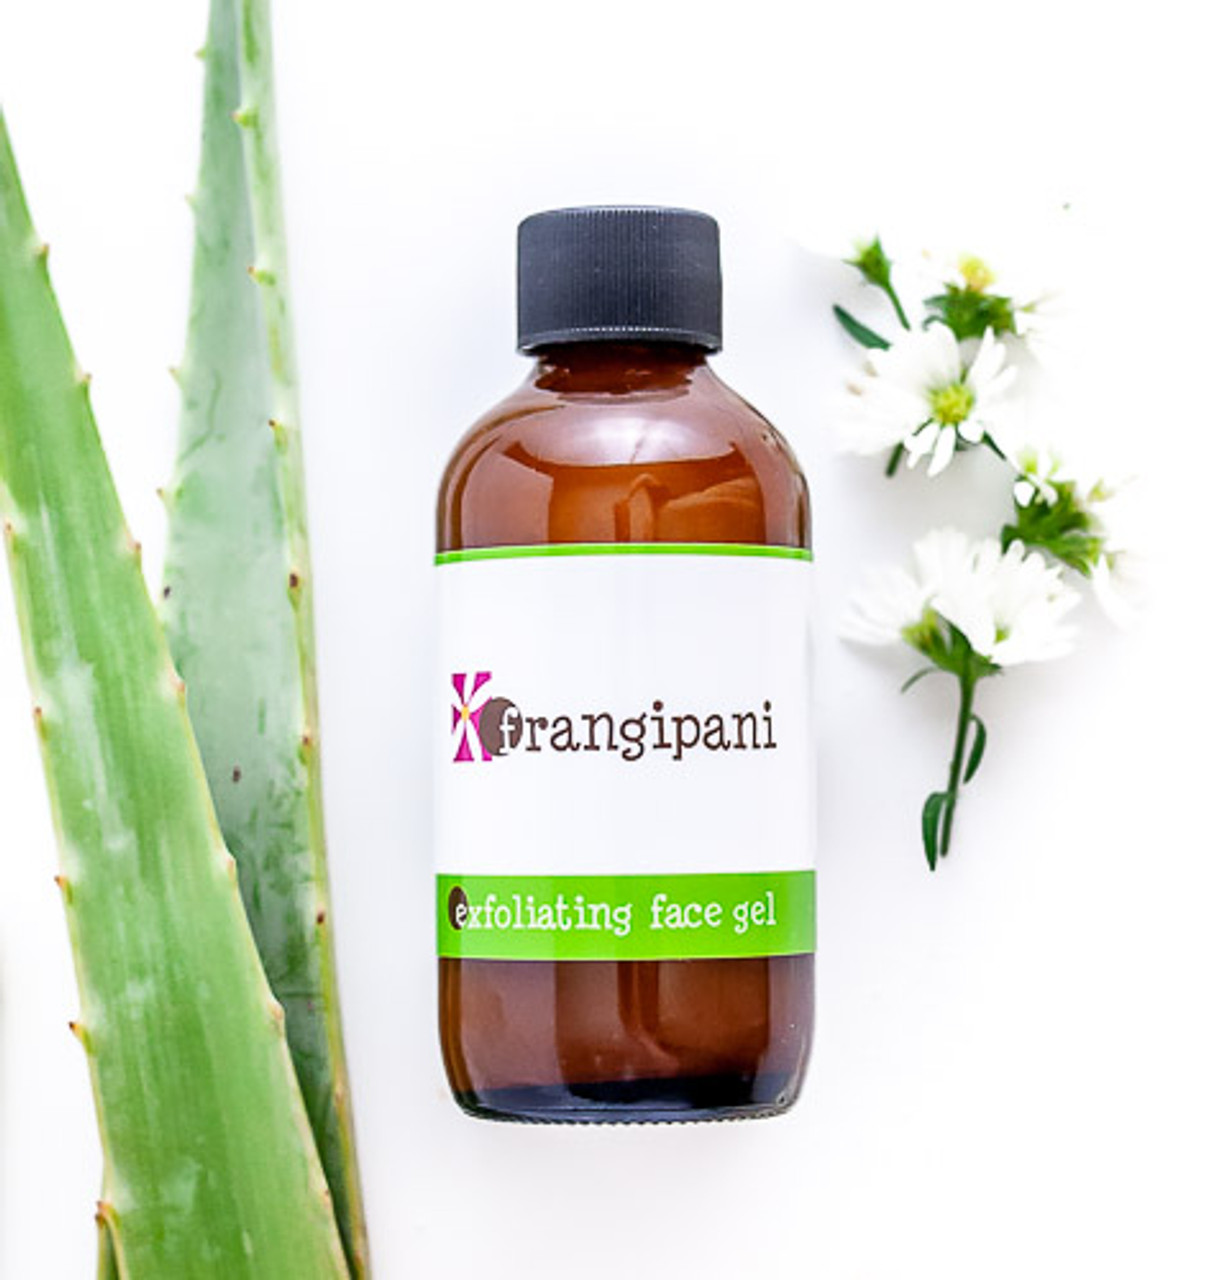 Exfoliating Face Gel | Frangipani Body Products | Natural Face Scrub